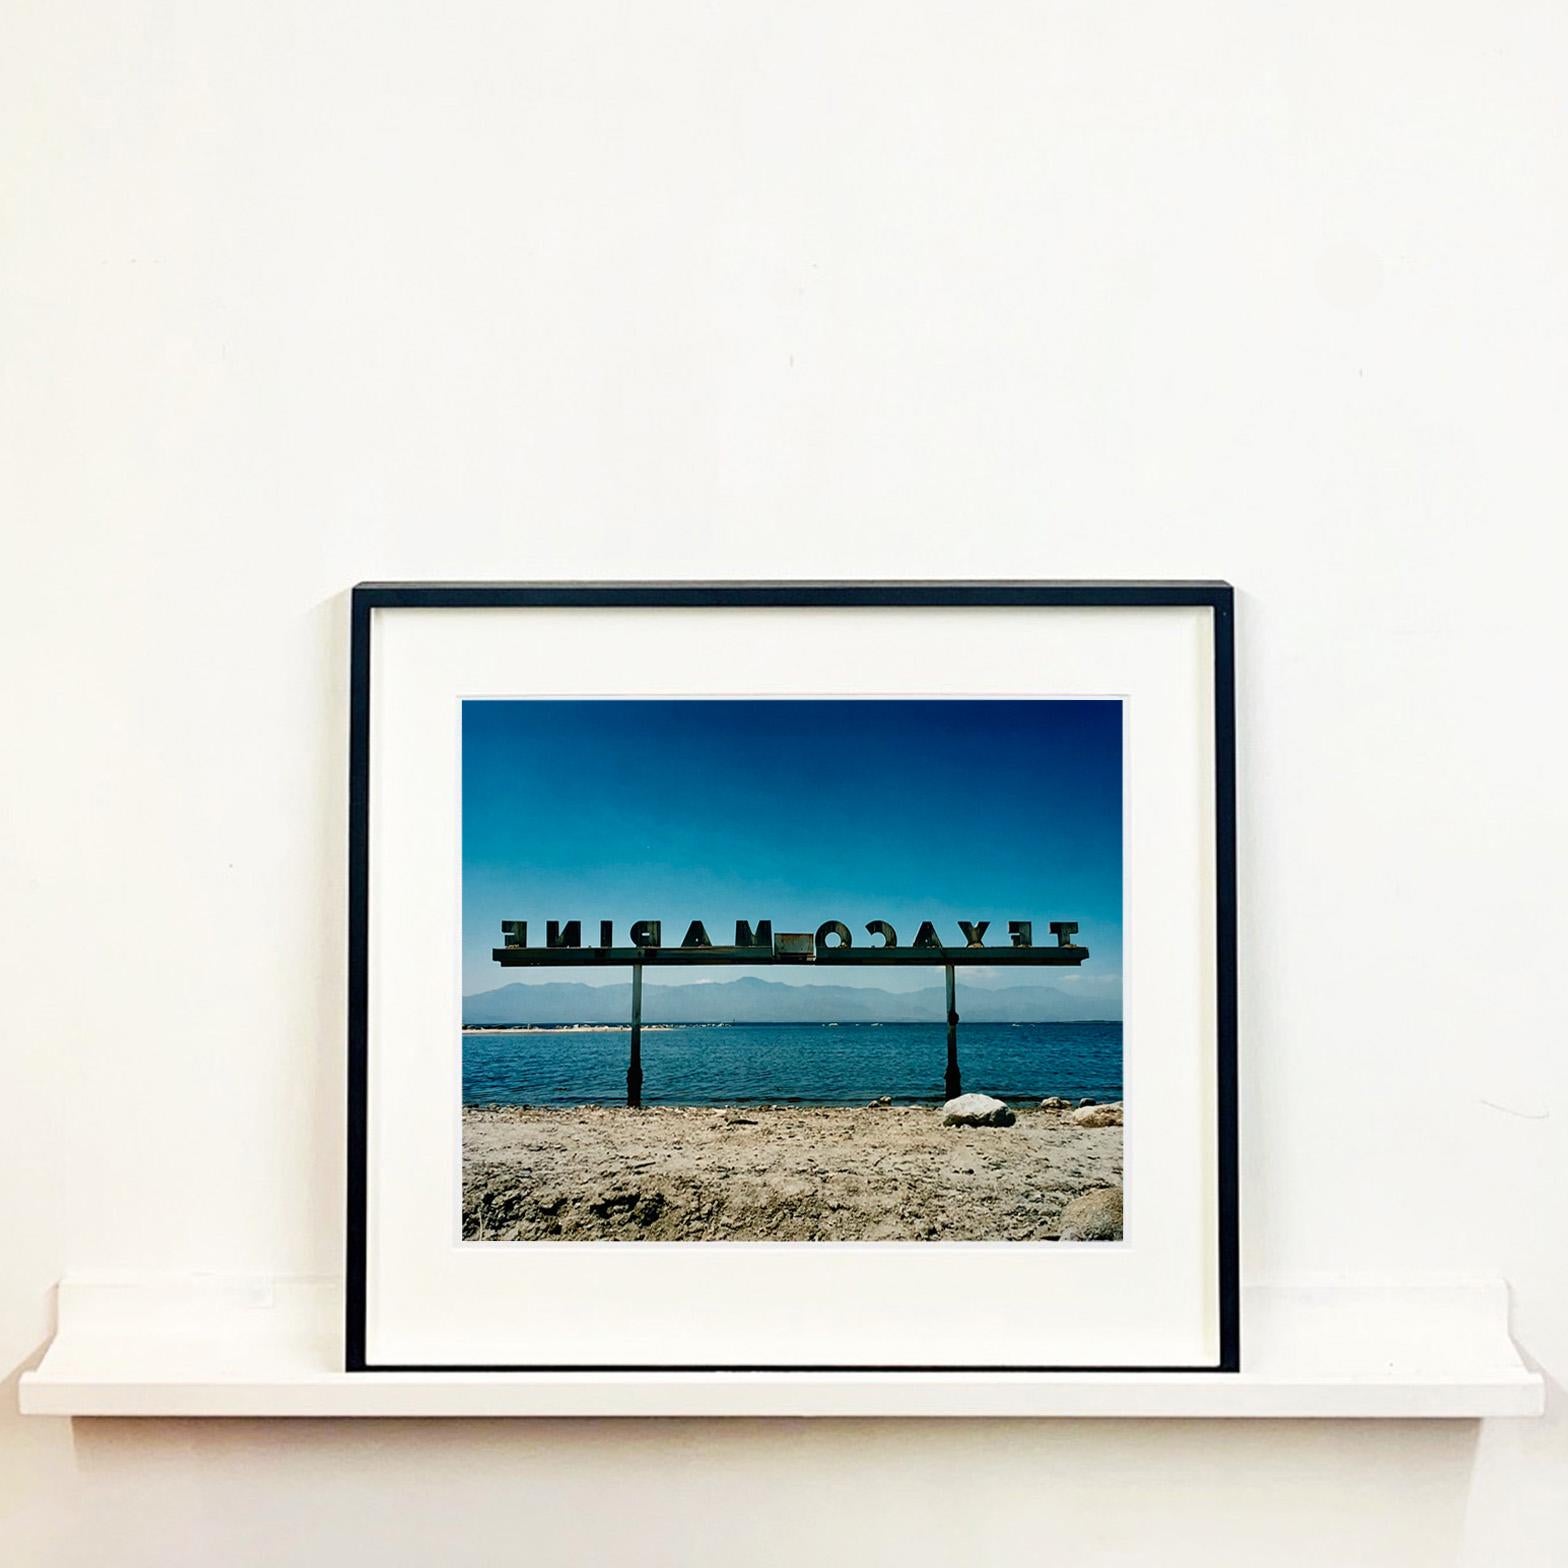 Texaco Marine, North Shore Marina, Salton Sea, California - Landscape Photograph - Blue Color Photograph by Richard Heeps